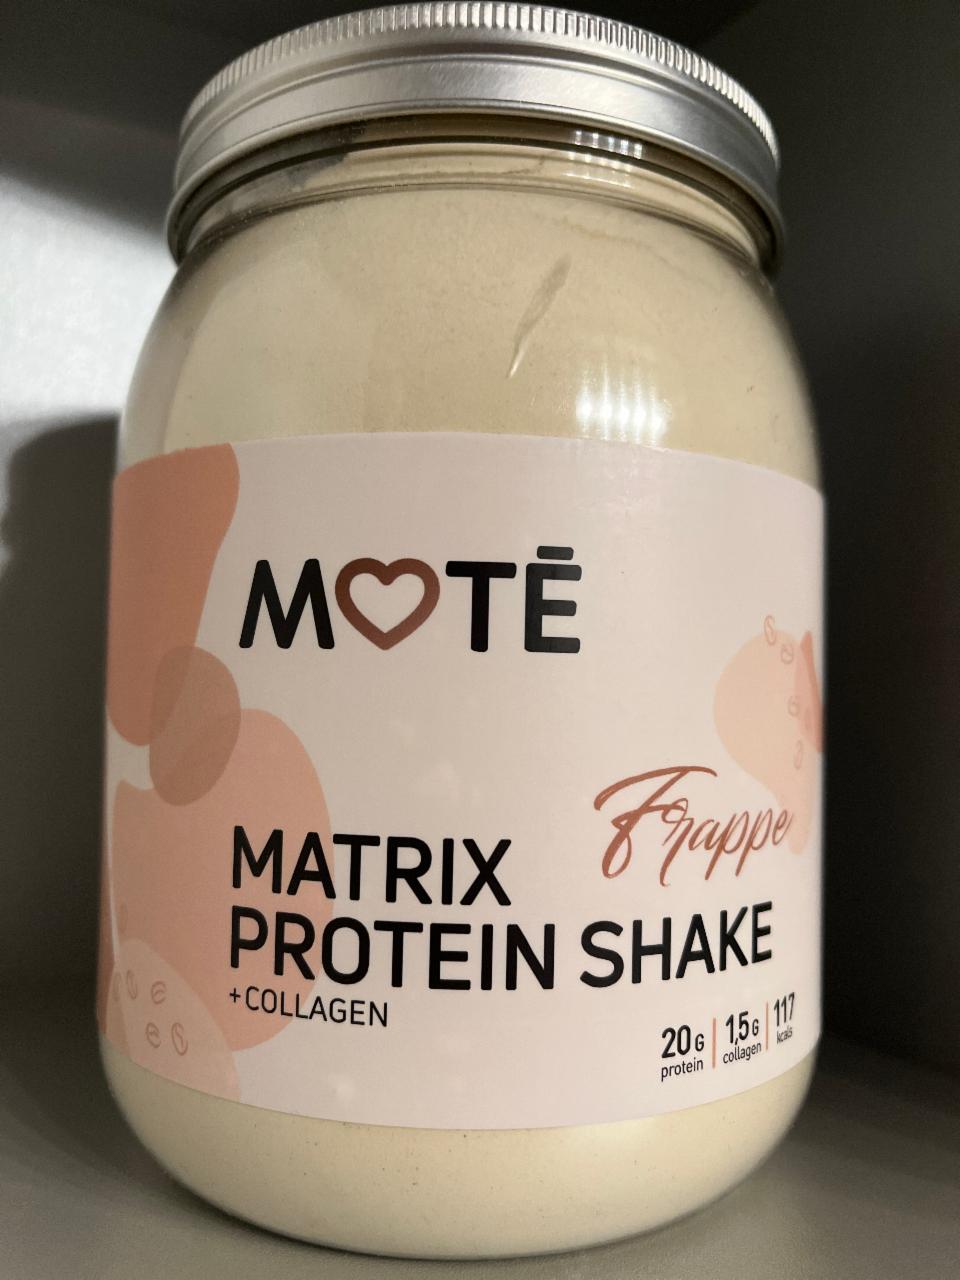 Фото - Мэтрикс Протеин Шейк со вкусом Фраппе matrix protein shake frappe Mote